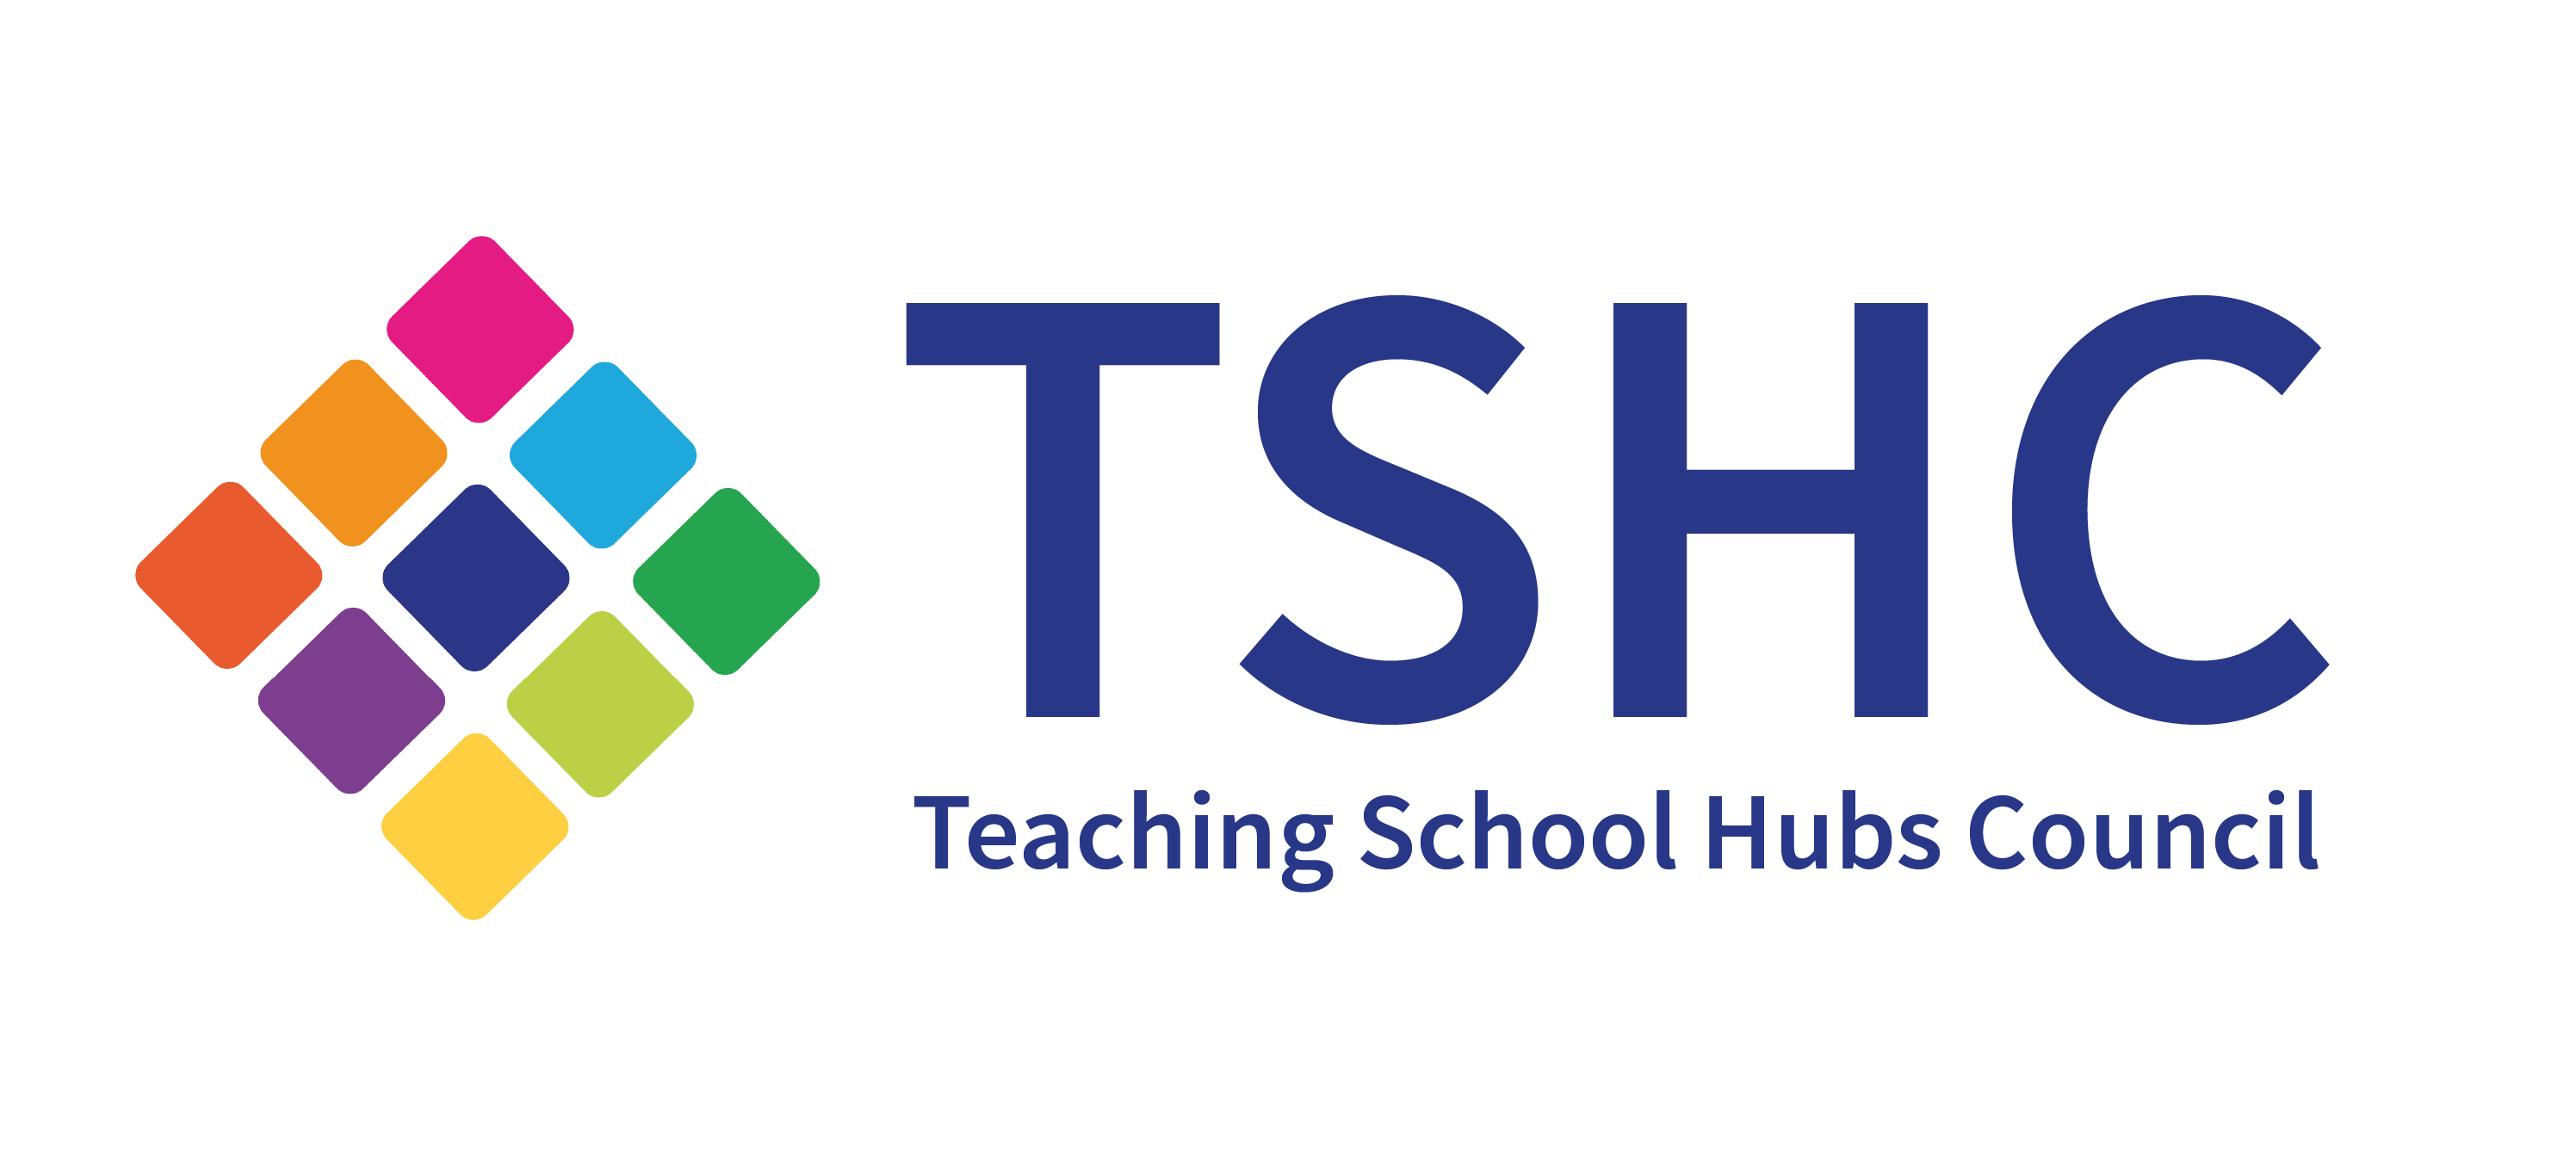 Teaching School Hubs Council